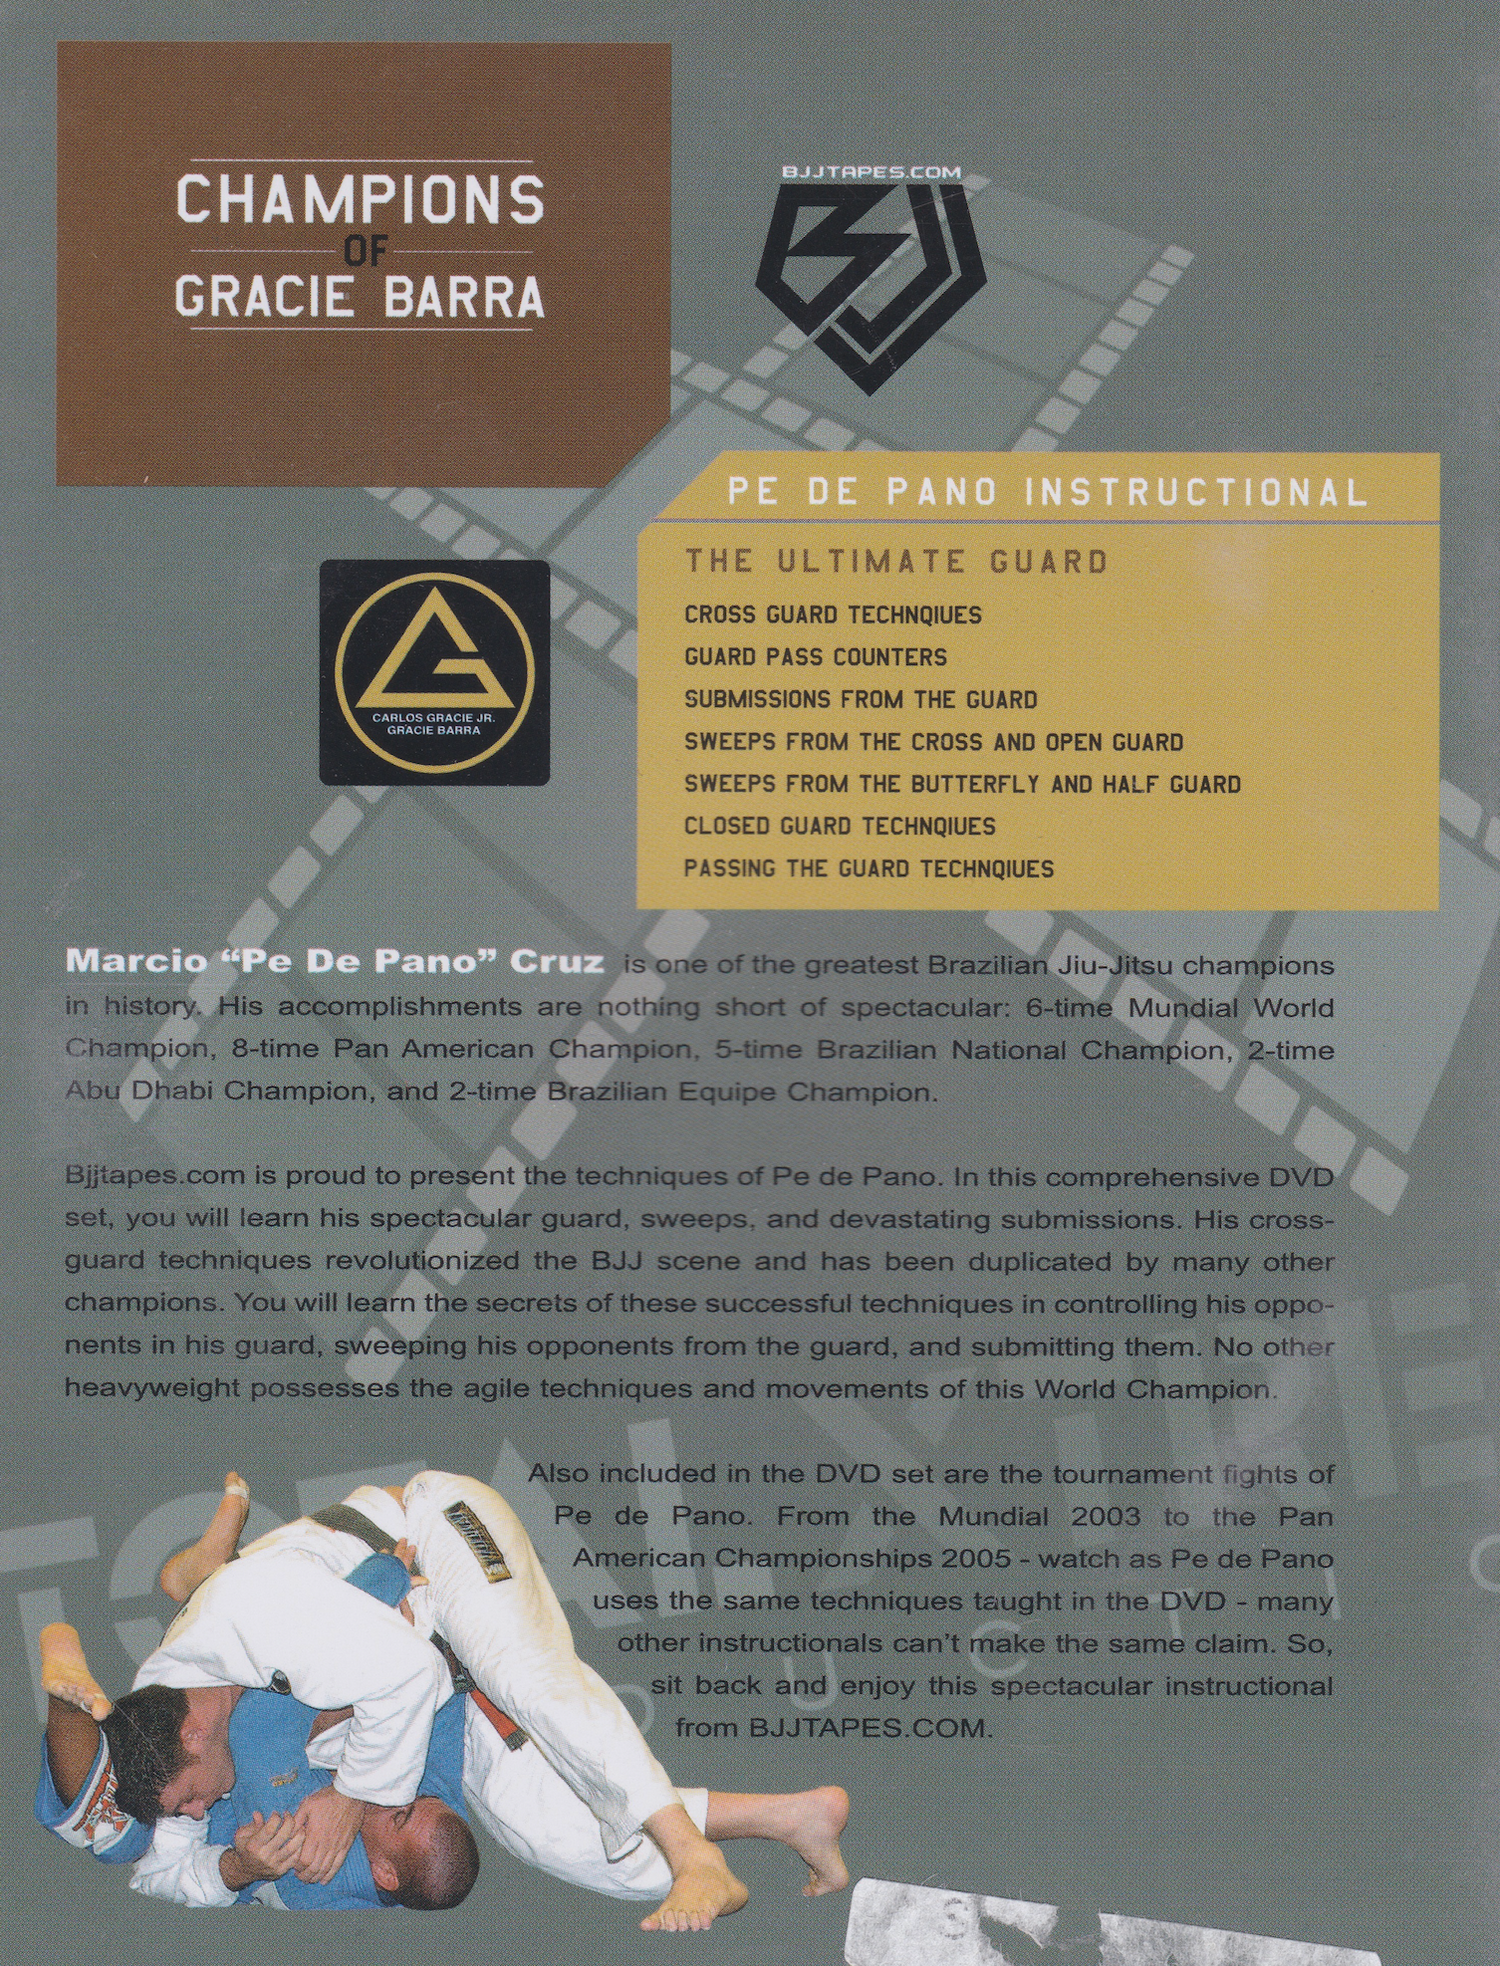 Champions of Gracie Barra: Marcio Pe De Pano Cruz 2 DVD Set (Preowned)